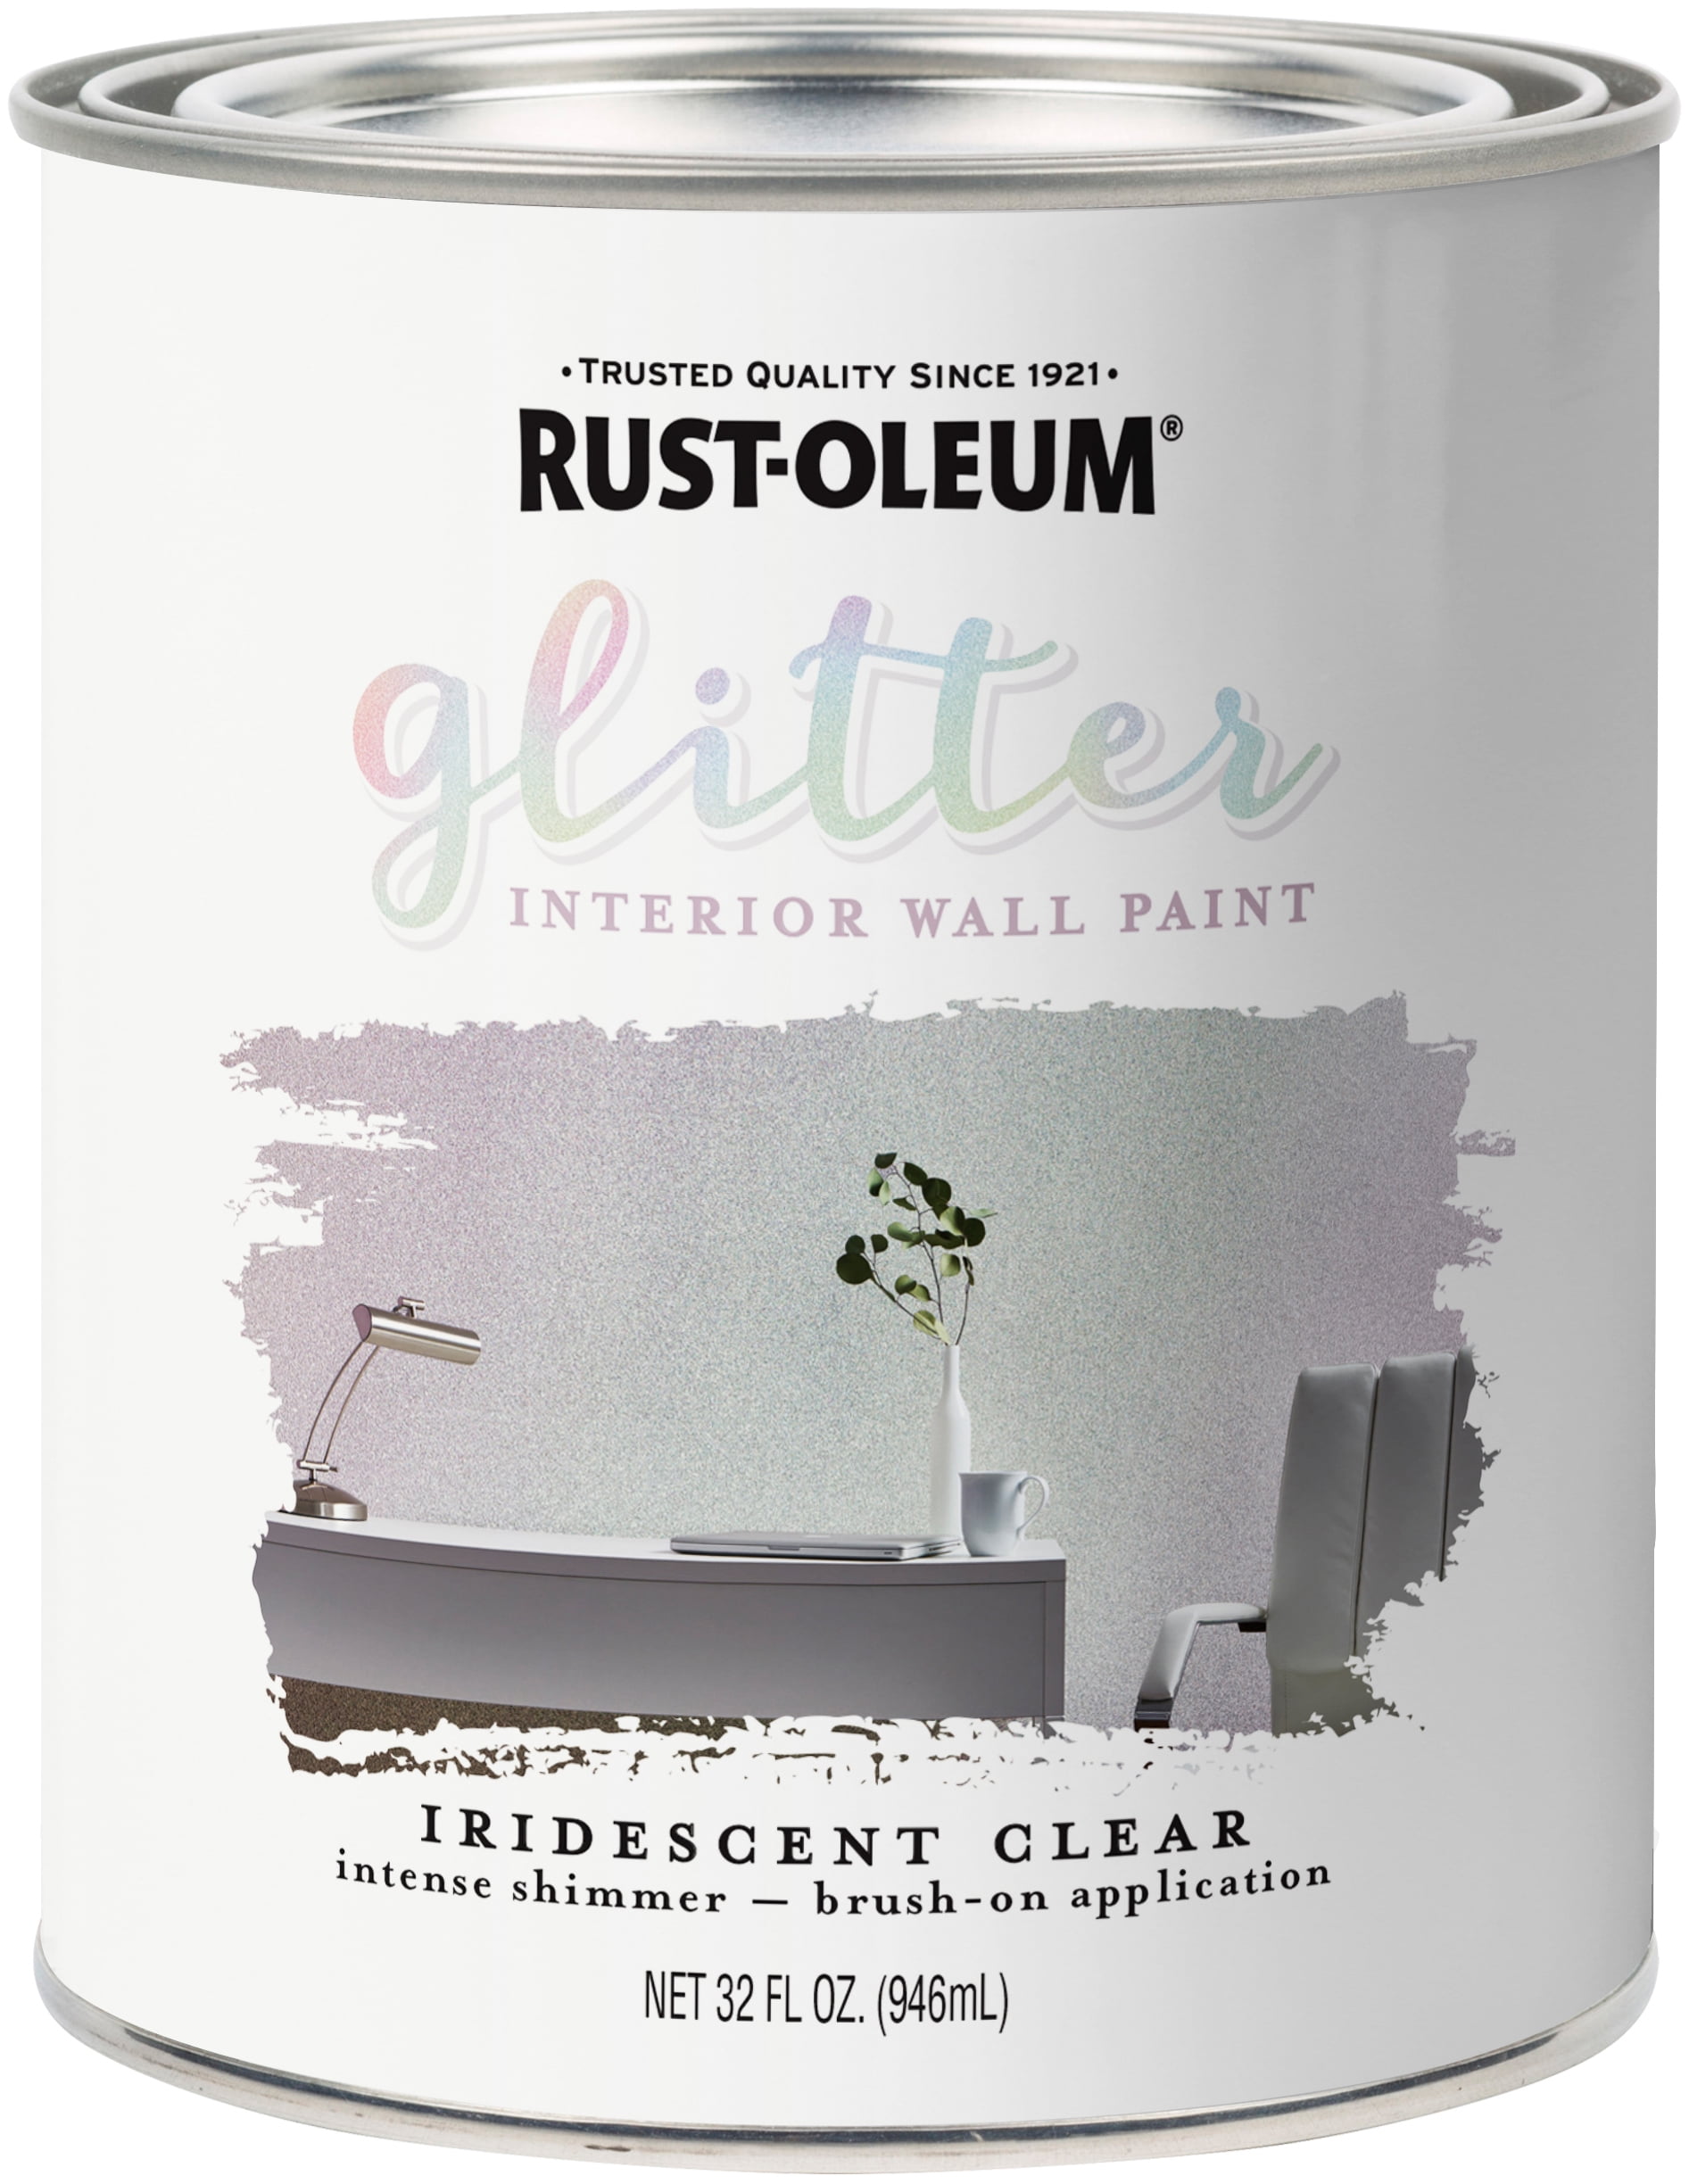 Radiance Glitter Paint Glaze Emulsion walls cheap wallpaper bathrooms 